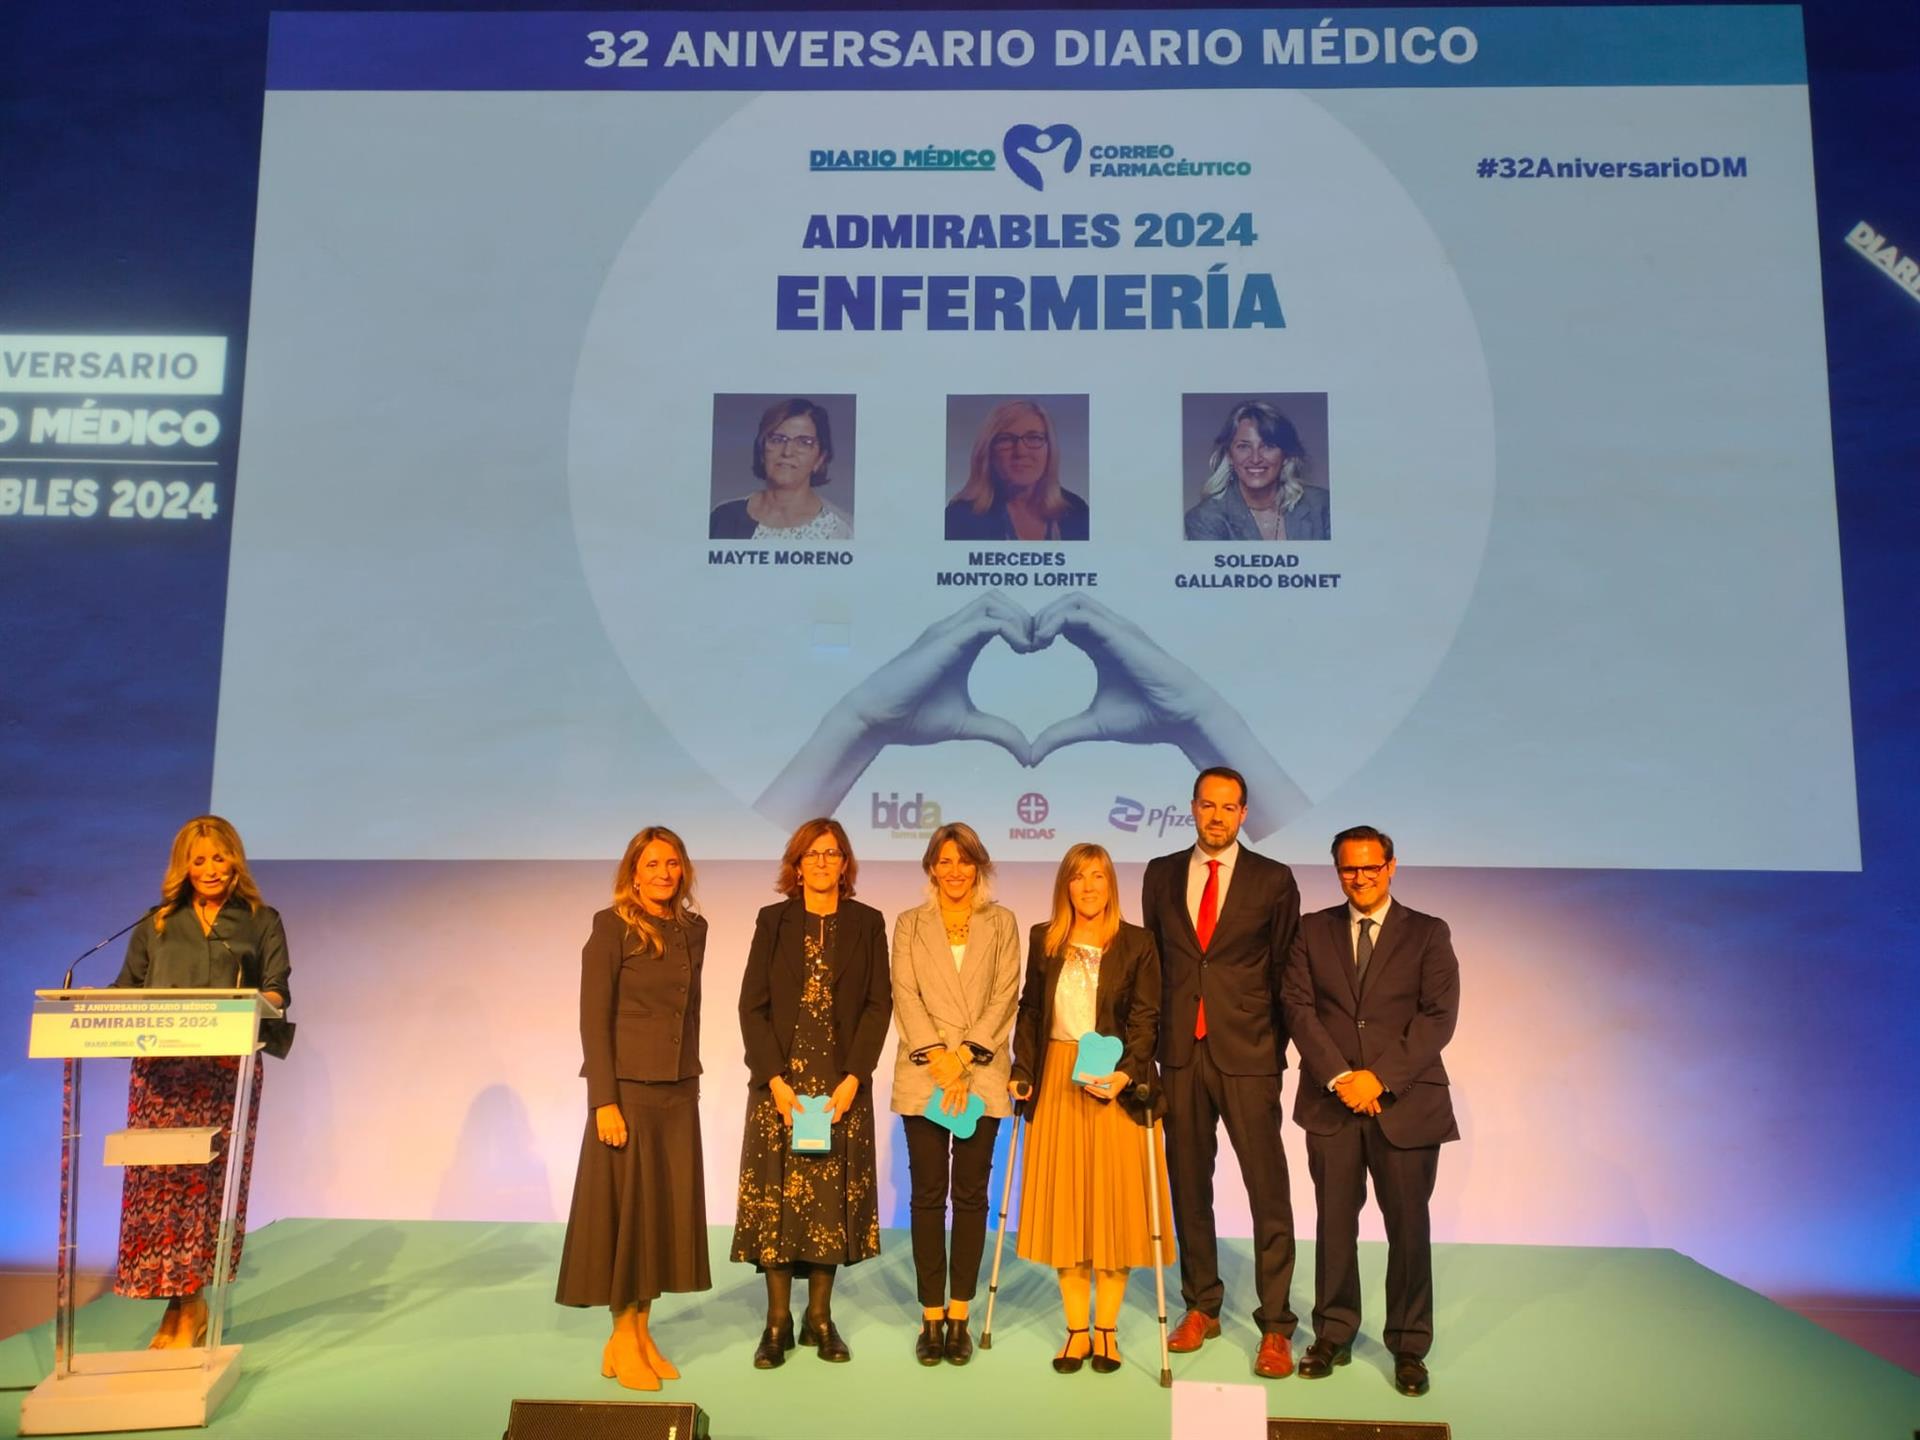 La gerente del Hospital Son Llàtzer, Soledad Gallardo, recibe el premio Admirables 2024 - CAIB